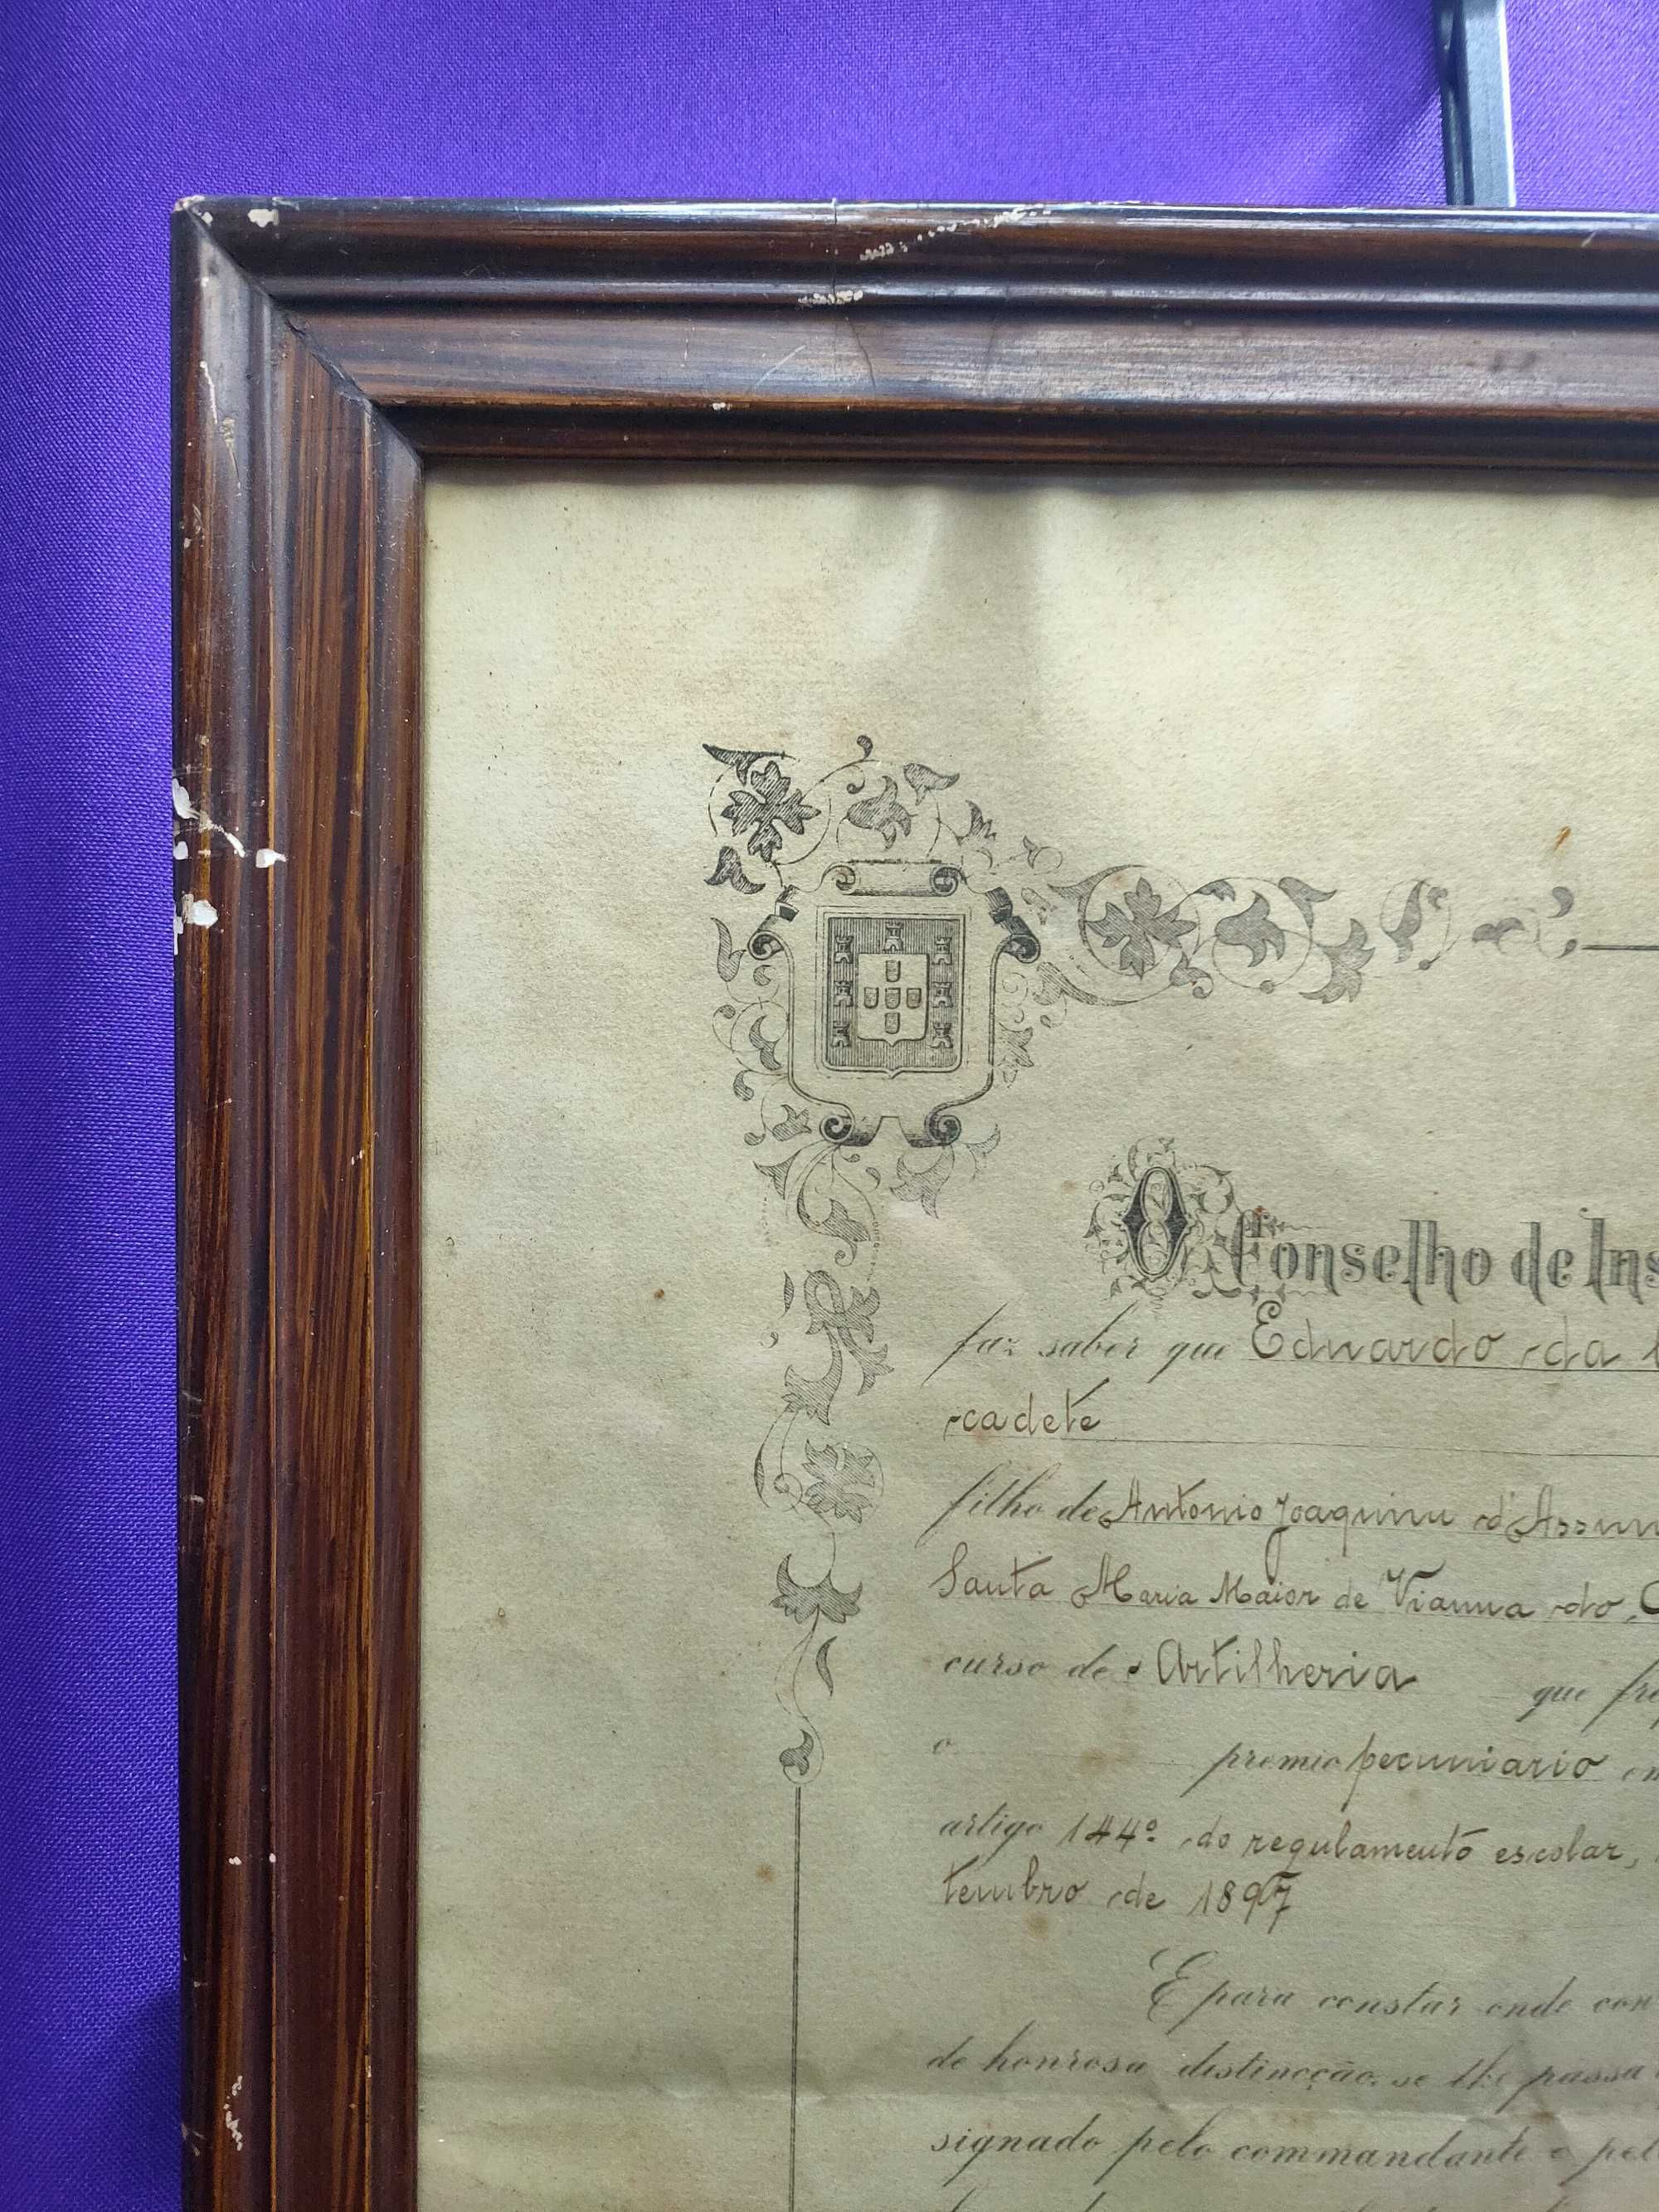 Item de colecionismo militar, Certificado de Sargento Cadete, 1910